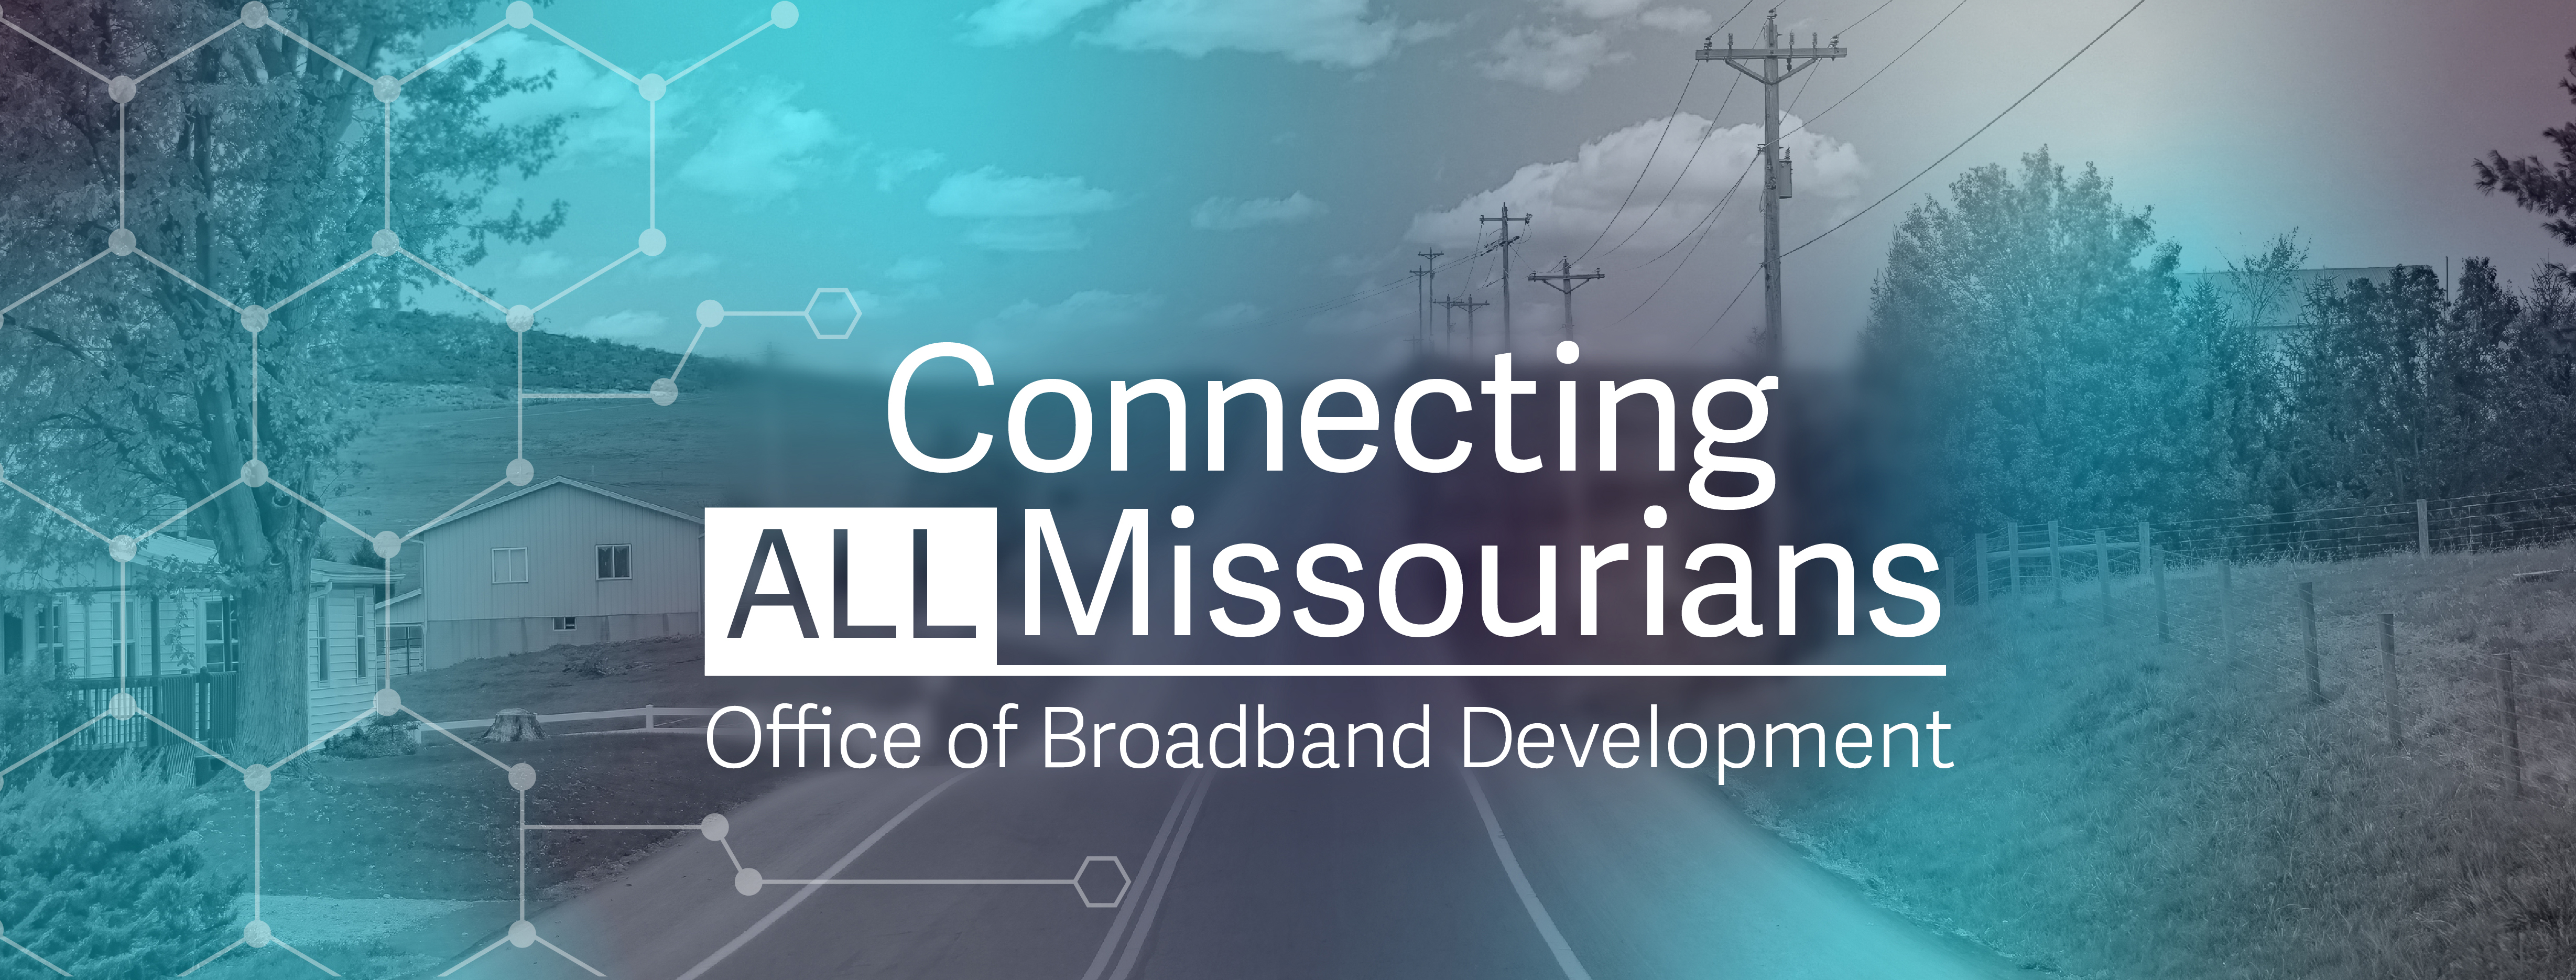 Connecting all Missourians - Office of Broadband Development